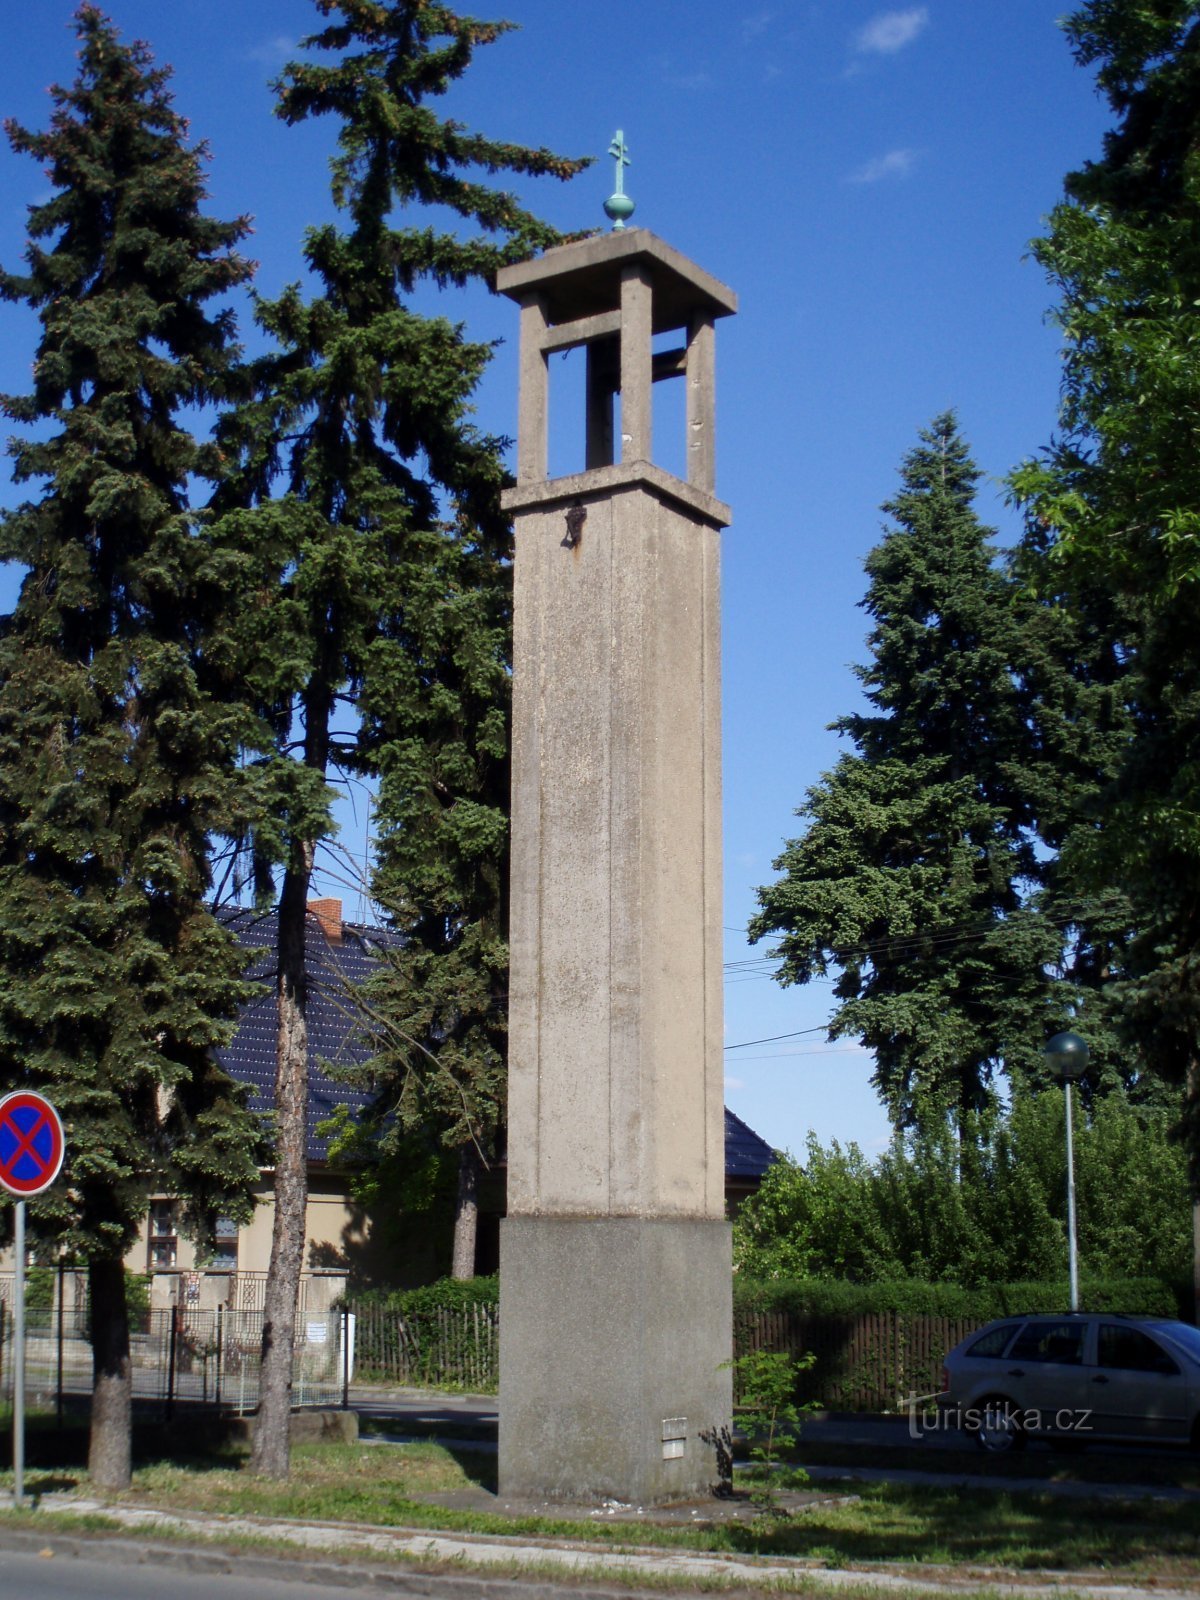 Tháp chuông ở Pouchov (Hradec Králové, 13.5.2009/XNUMX/XNUMX)